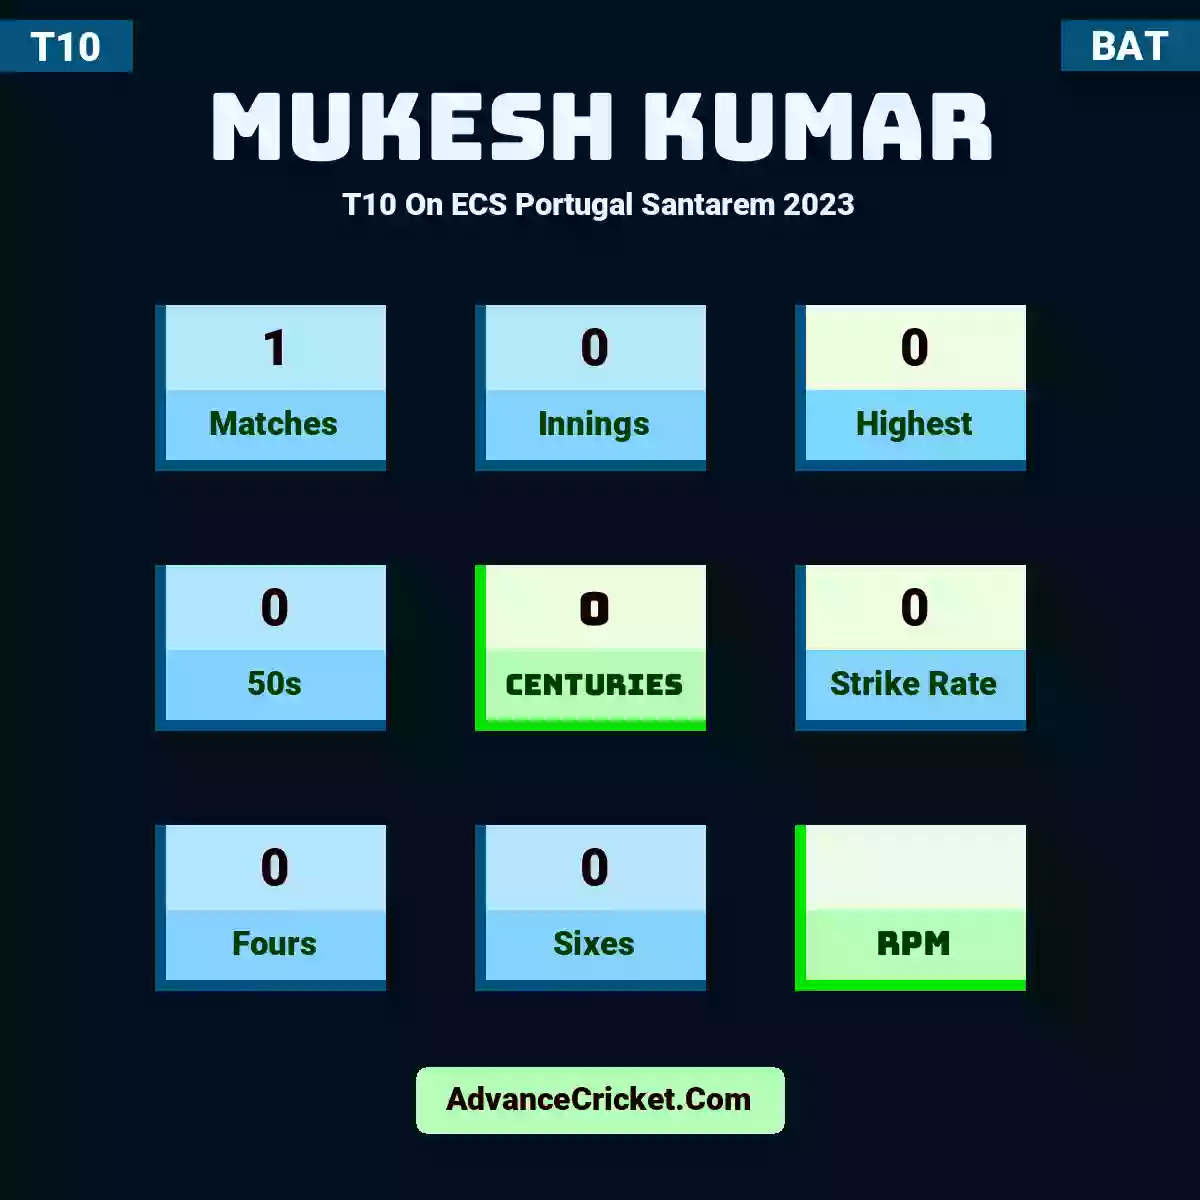 Mukesh Kumar T10  On ECS Portugal Santarem 2023, Mukesh Kumar played 1 matches, scored 0 runs as highest, 0 half-centuries, and 0 centuries, with a strike rate of 0. M.Kumar hit 0 fours and 0 sixes.